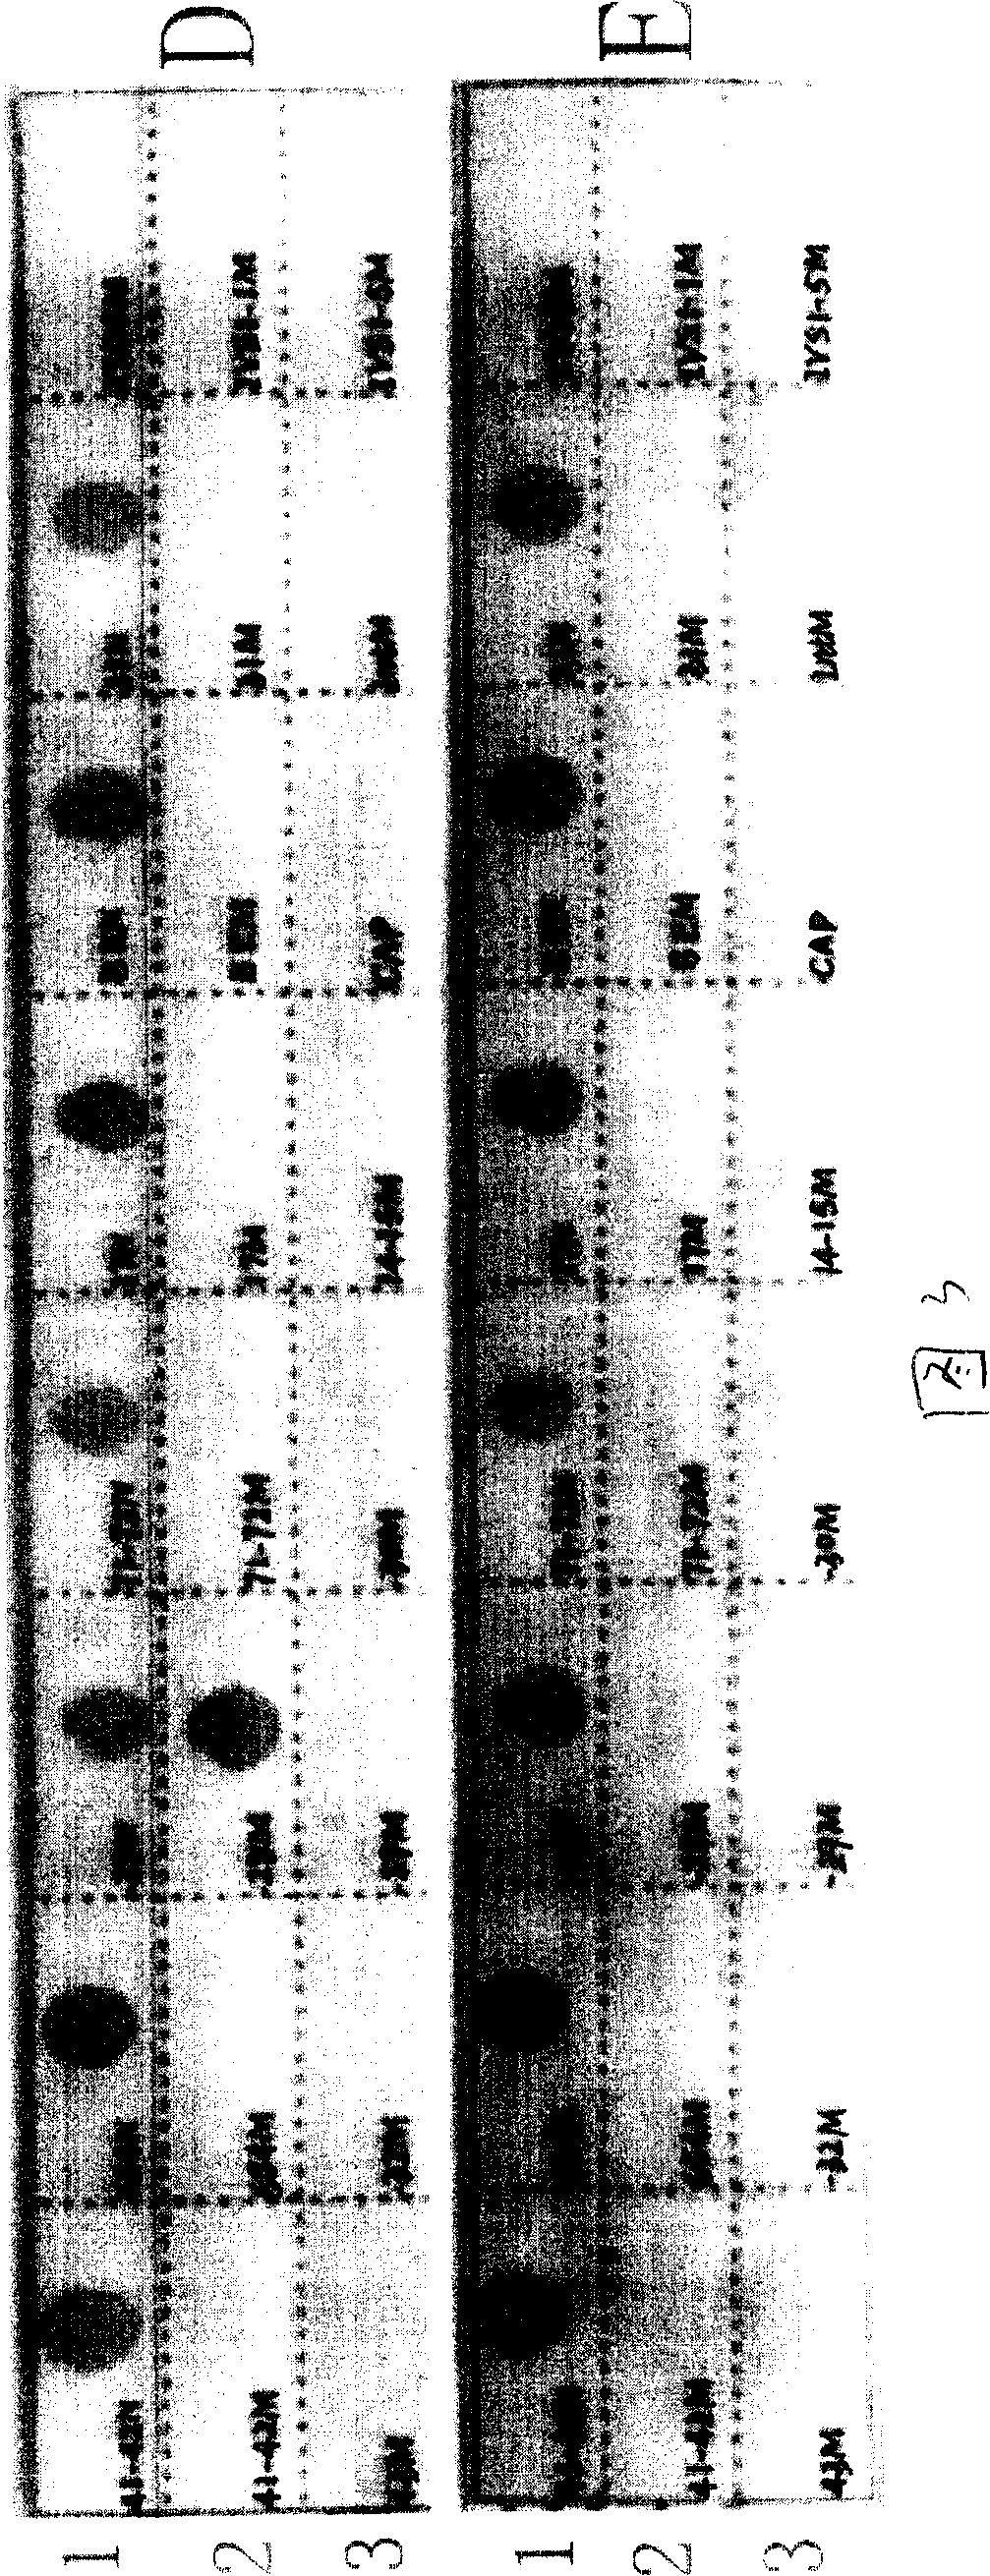 Nucleic acid hybrid film strip and reagent box used for diagnosing beta mediterranean sea thalassemia